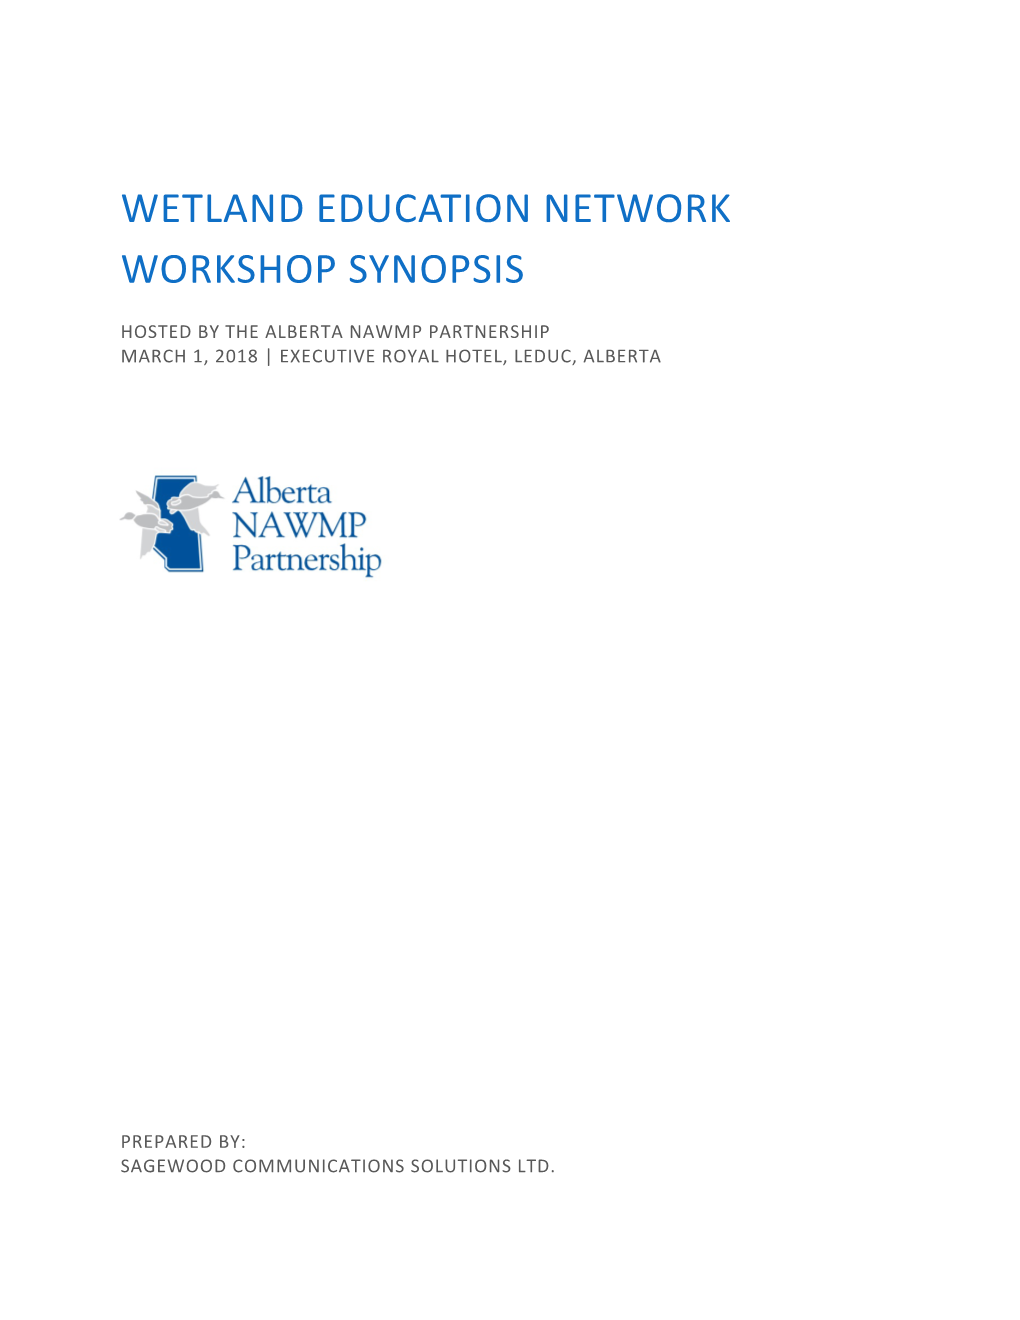 Wetland Education Network Workshop Synopsis